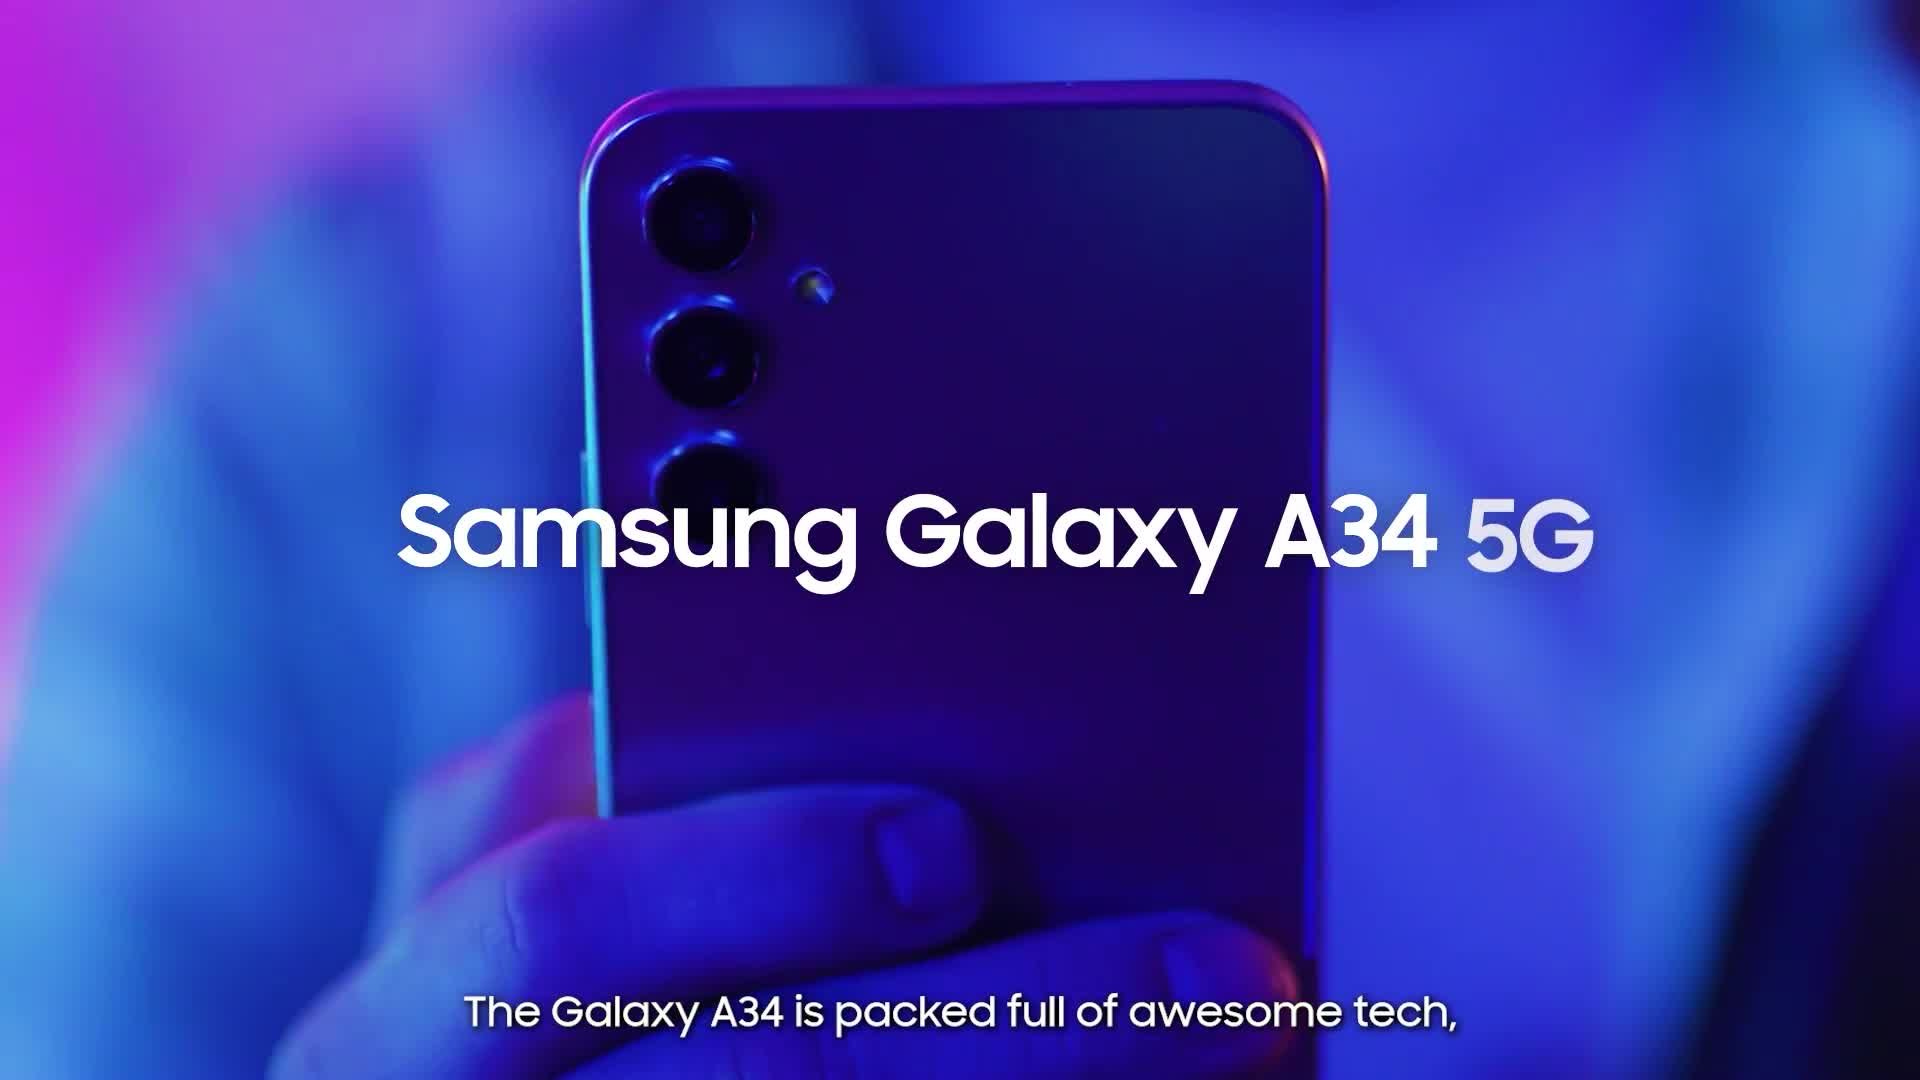 Samsung A34 5G Dual Sim 128GB - Black